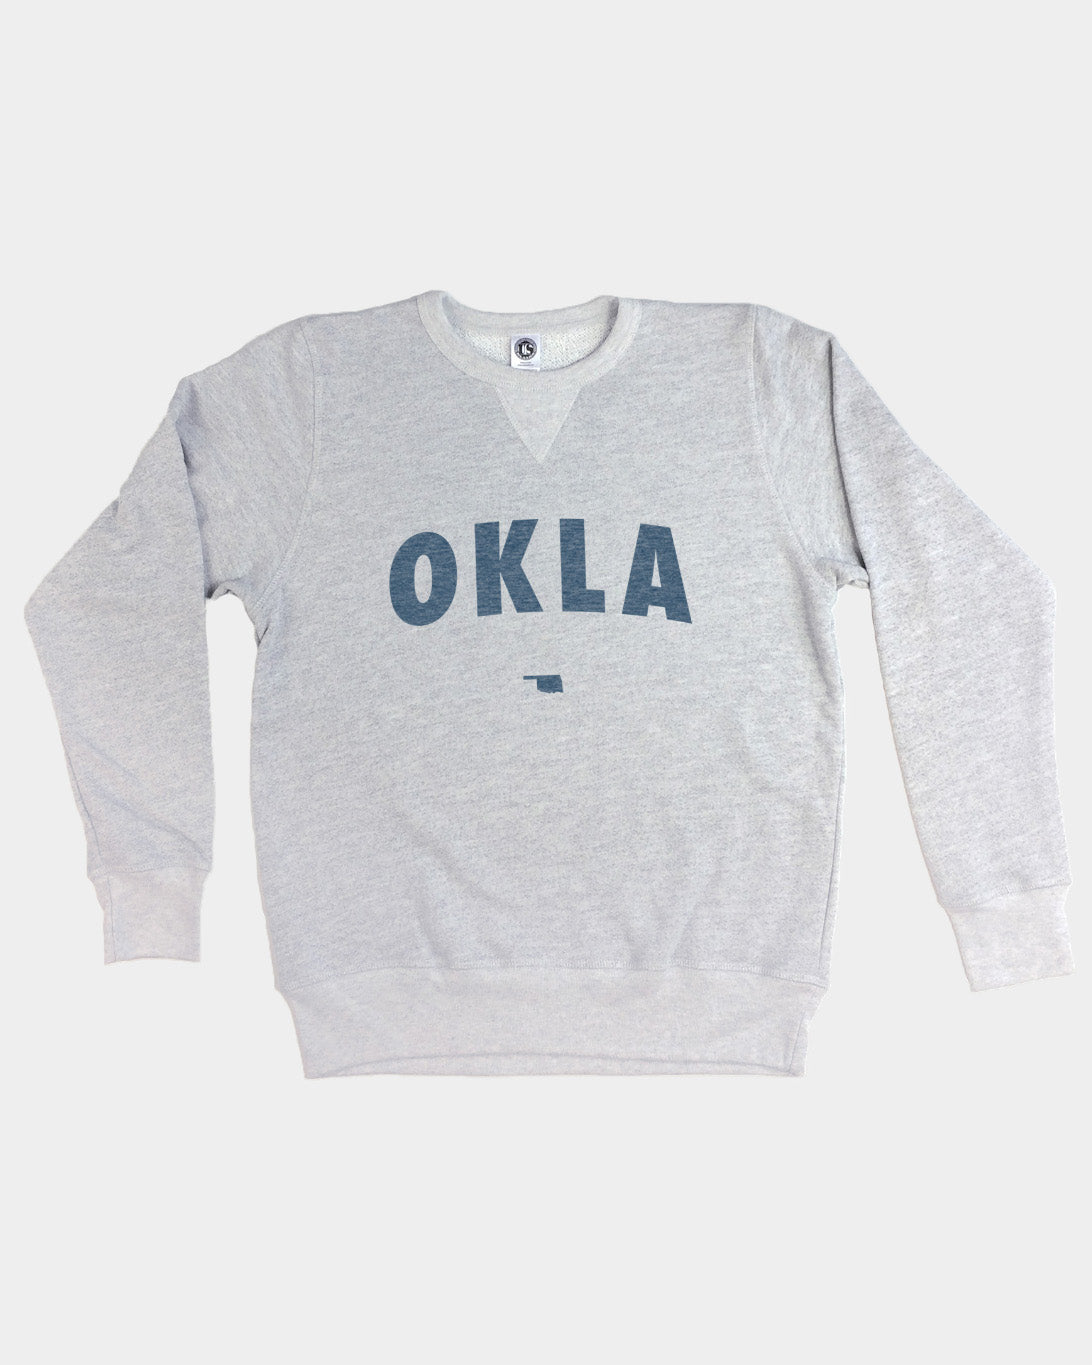 OKLA Pullover Sweatshirt